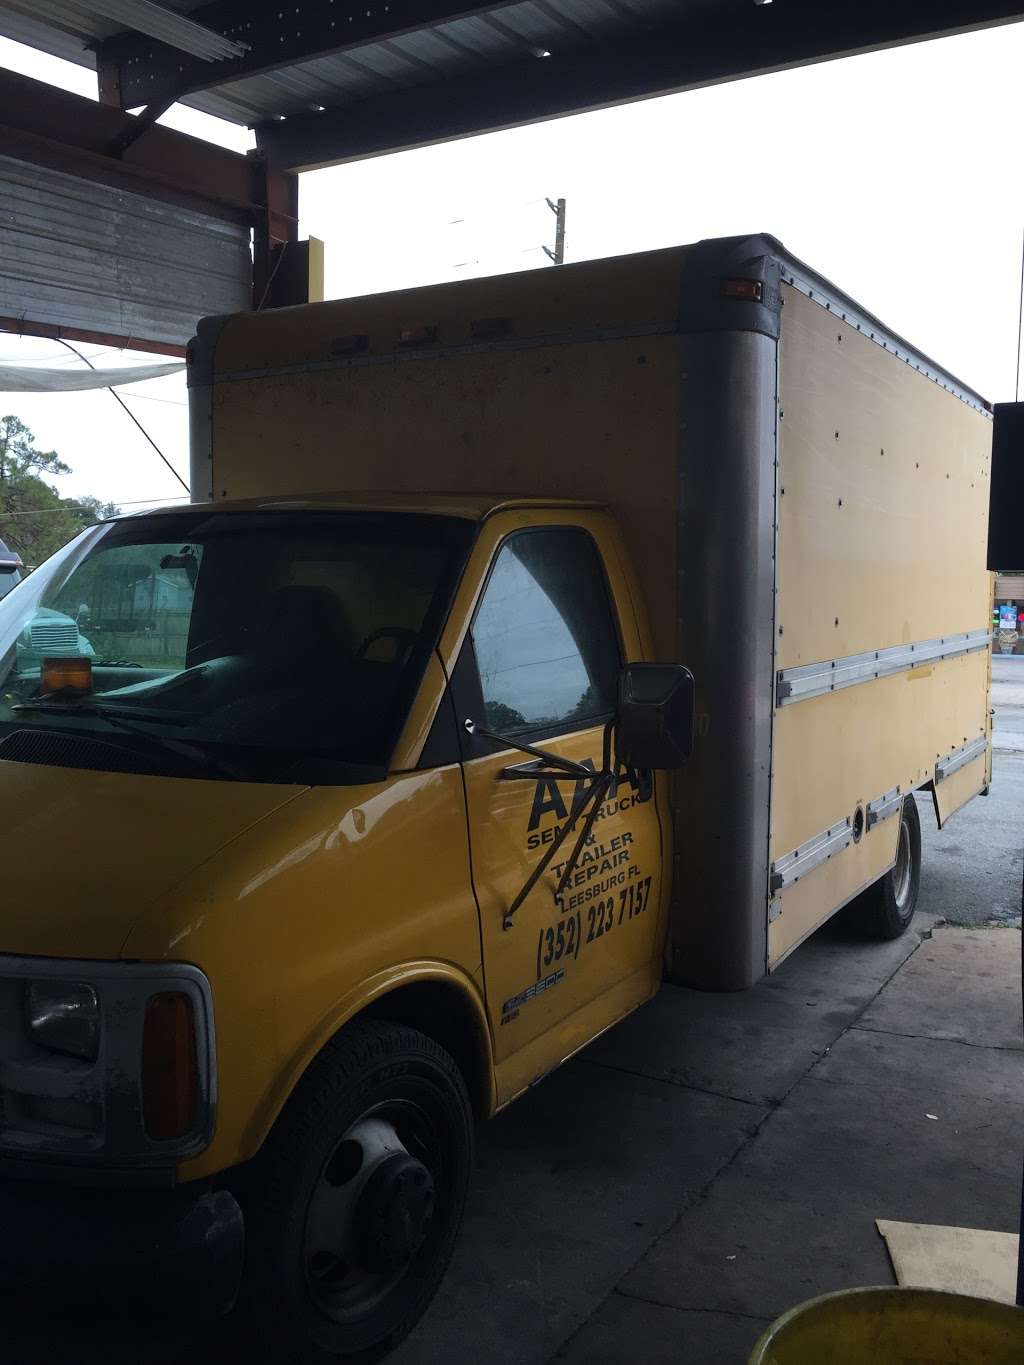 AAA Semi Truck & Trailer Repair | 11235 Northern Ave, Leesburg, FL 34788 | Phone: (352) 343-0740